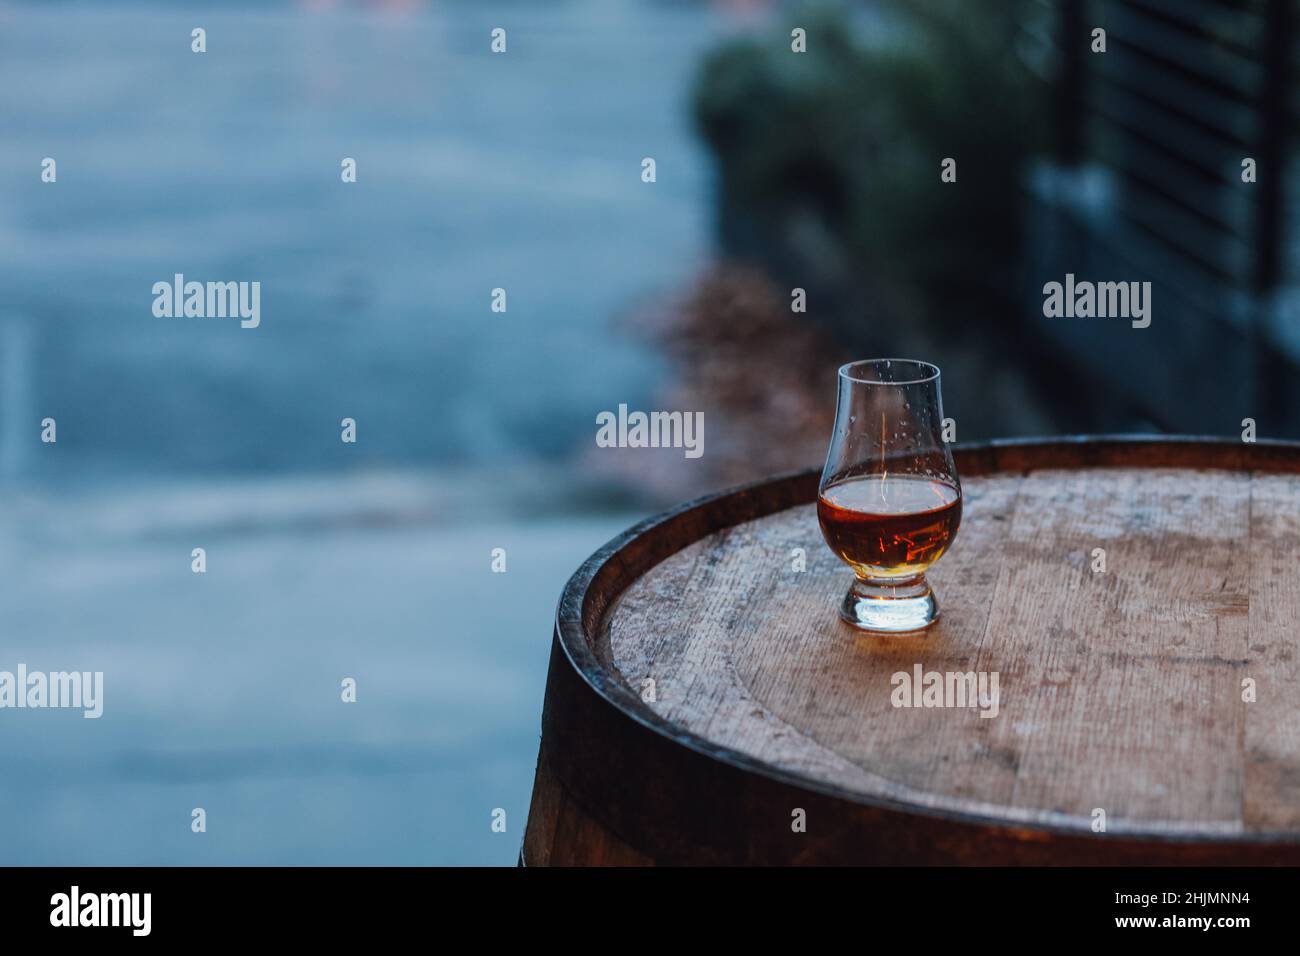 Glencairn glass with whiskey on bourbon barrel Stock Photo